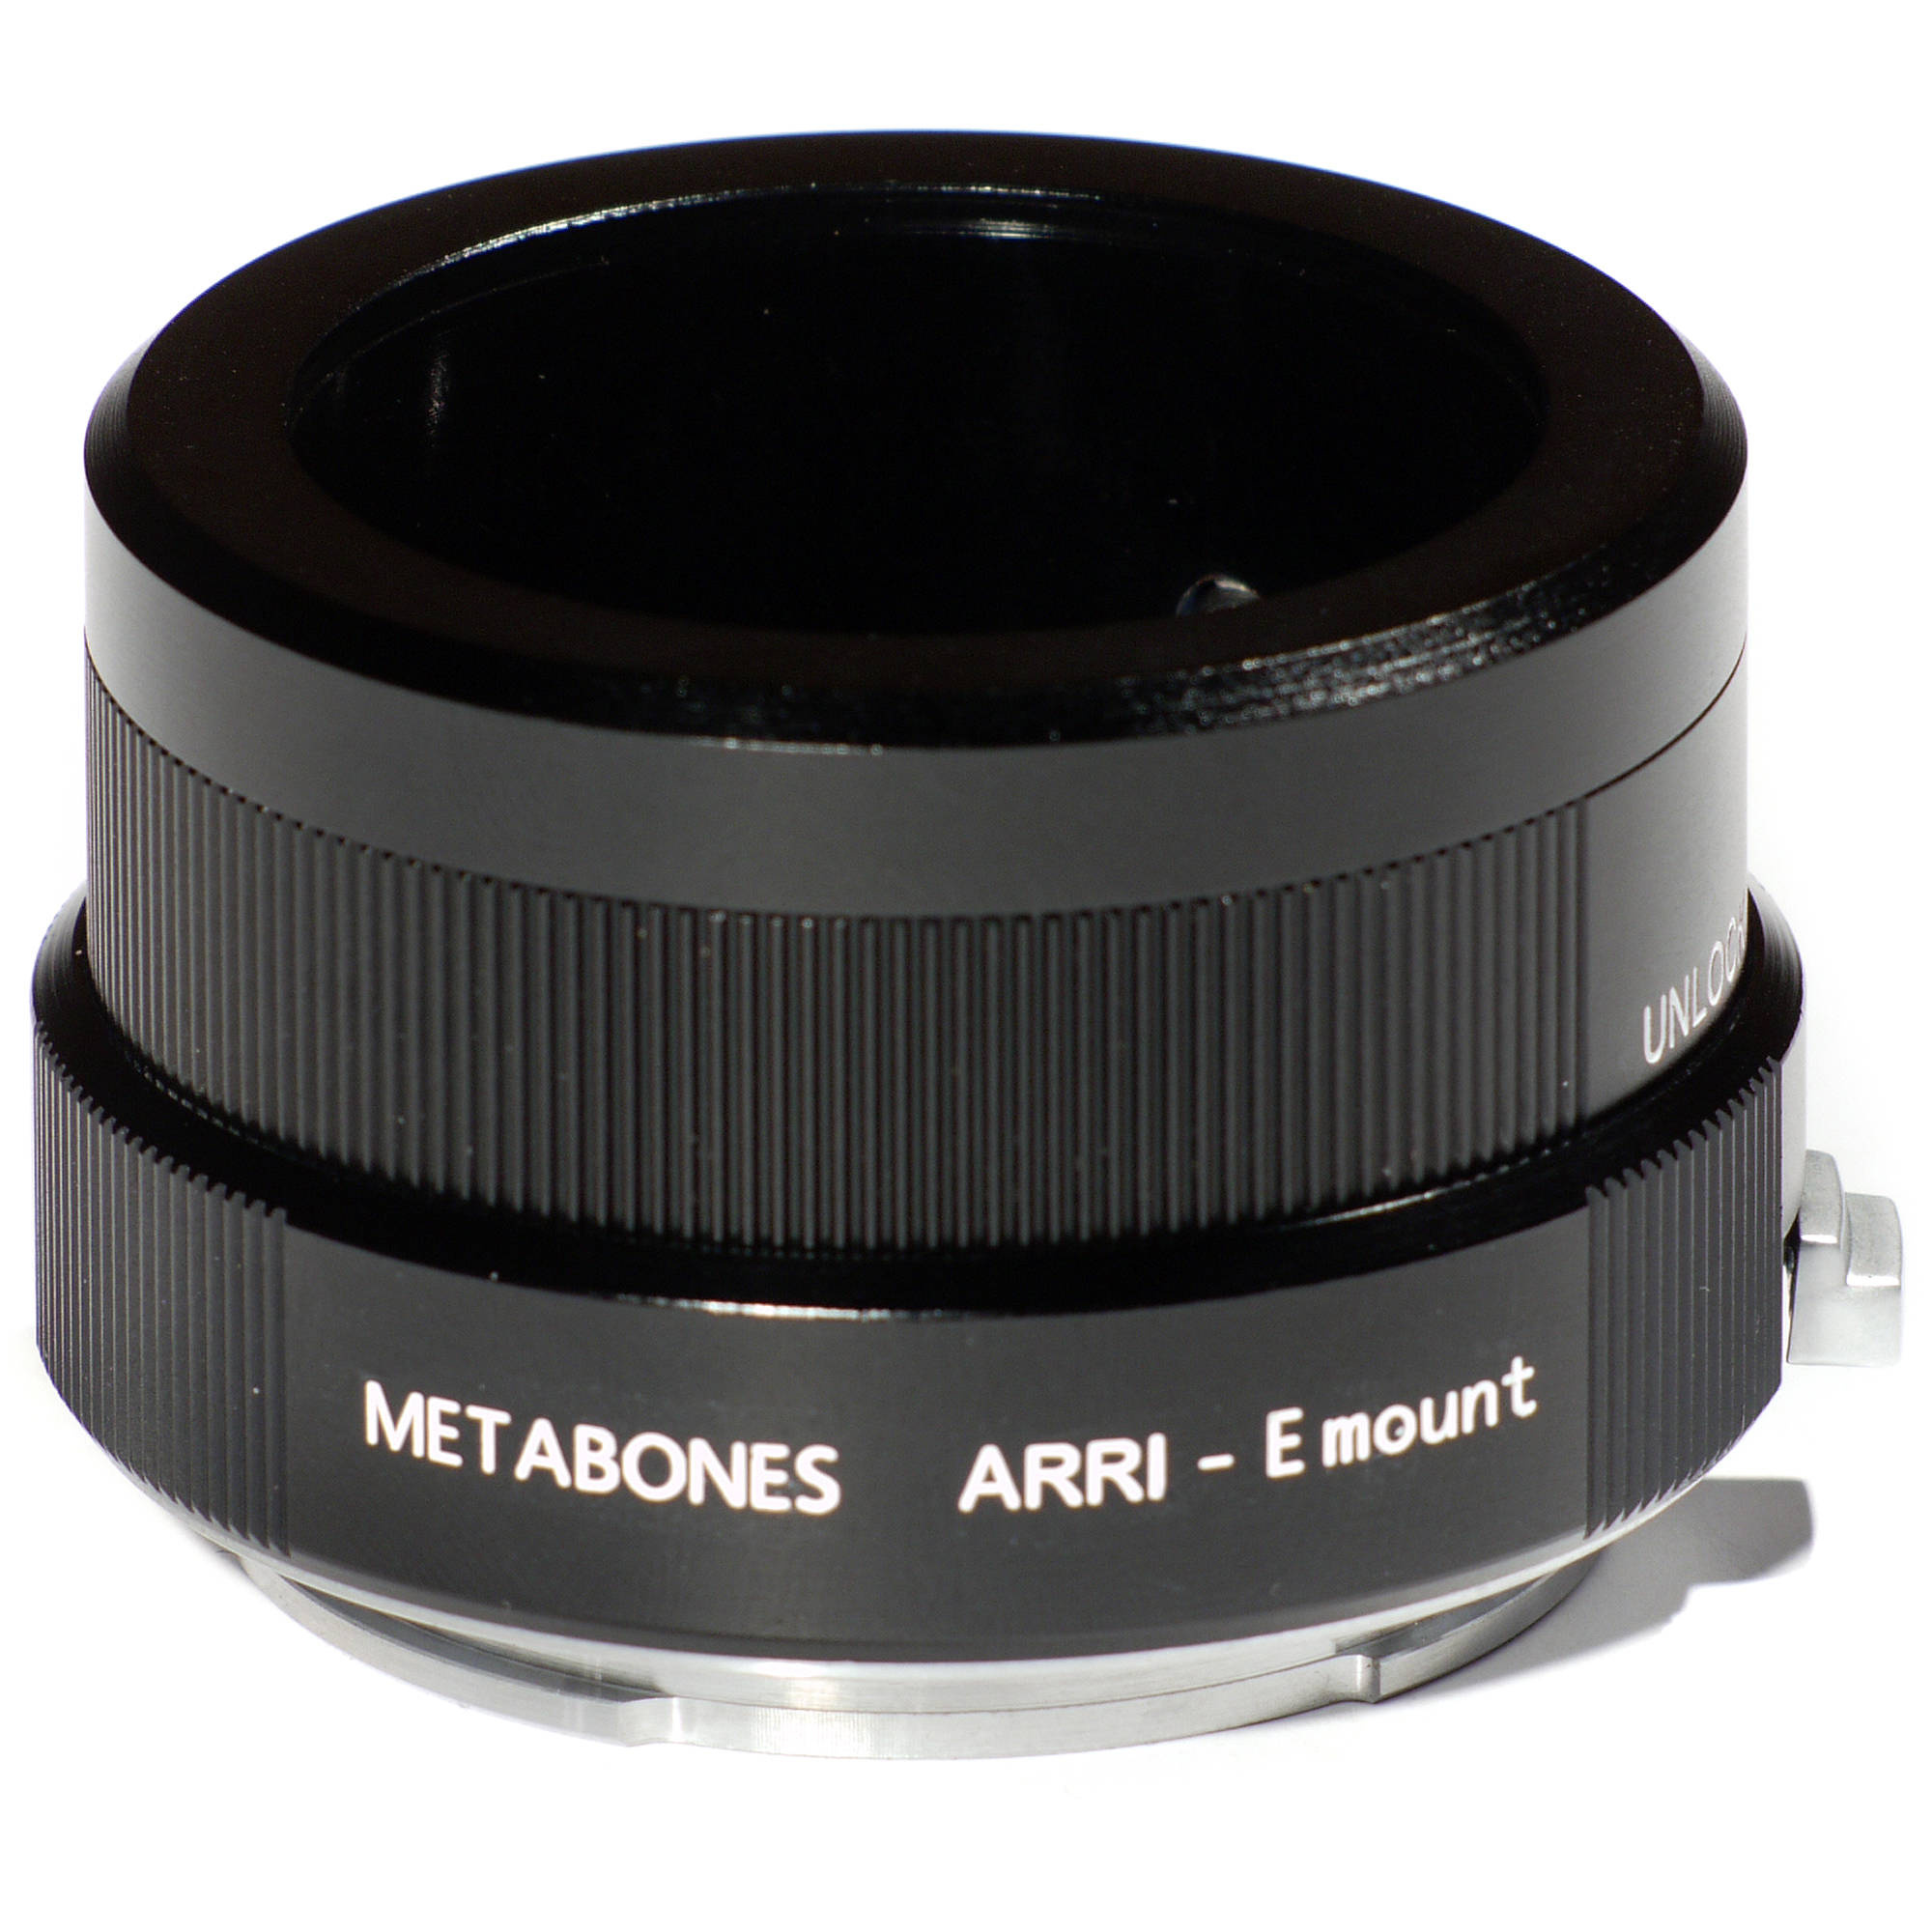 Metabones Arriflex Mount Lens to Sony NEX Camera Lens Mount Adapter (Black)